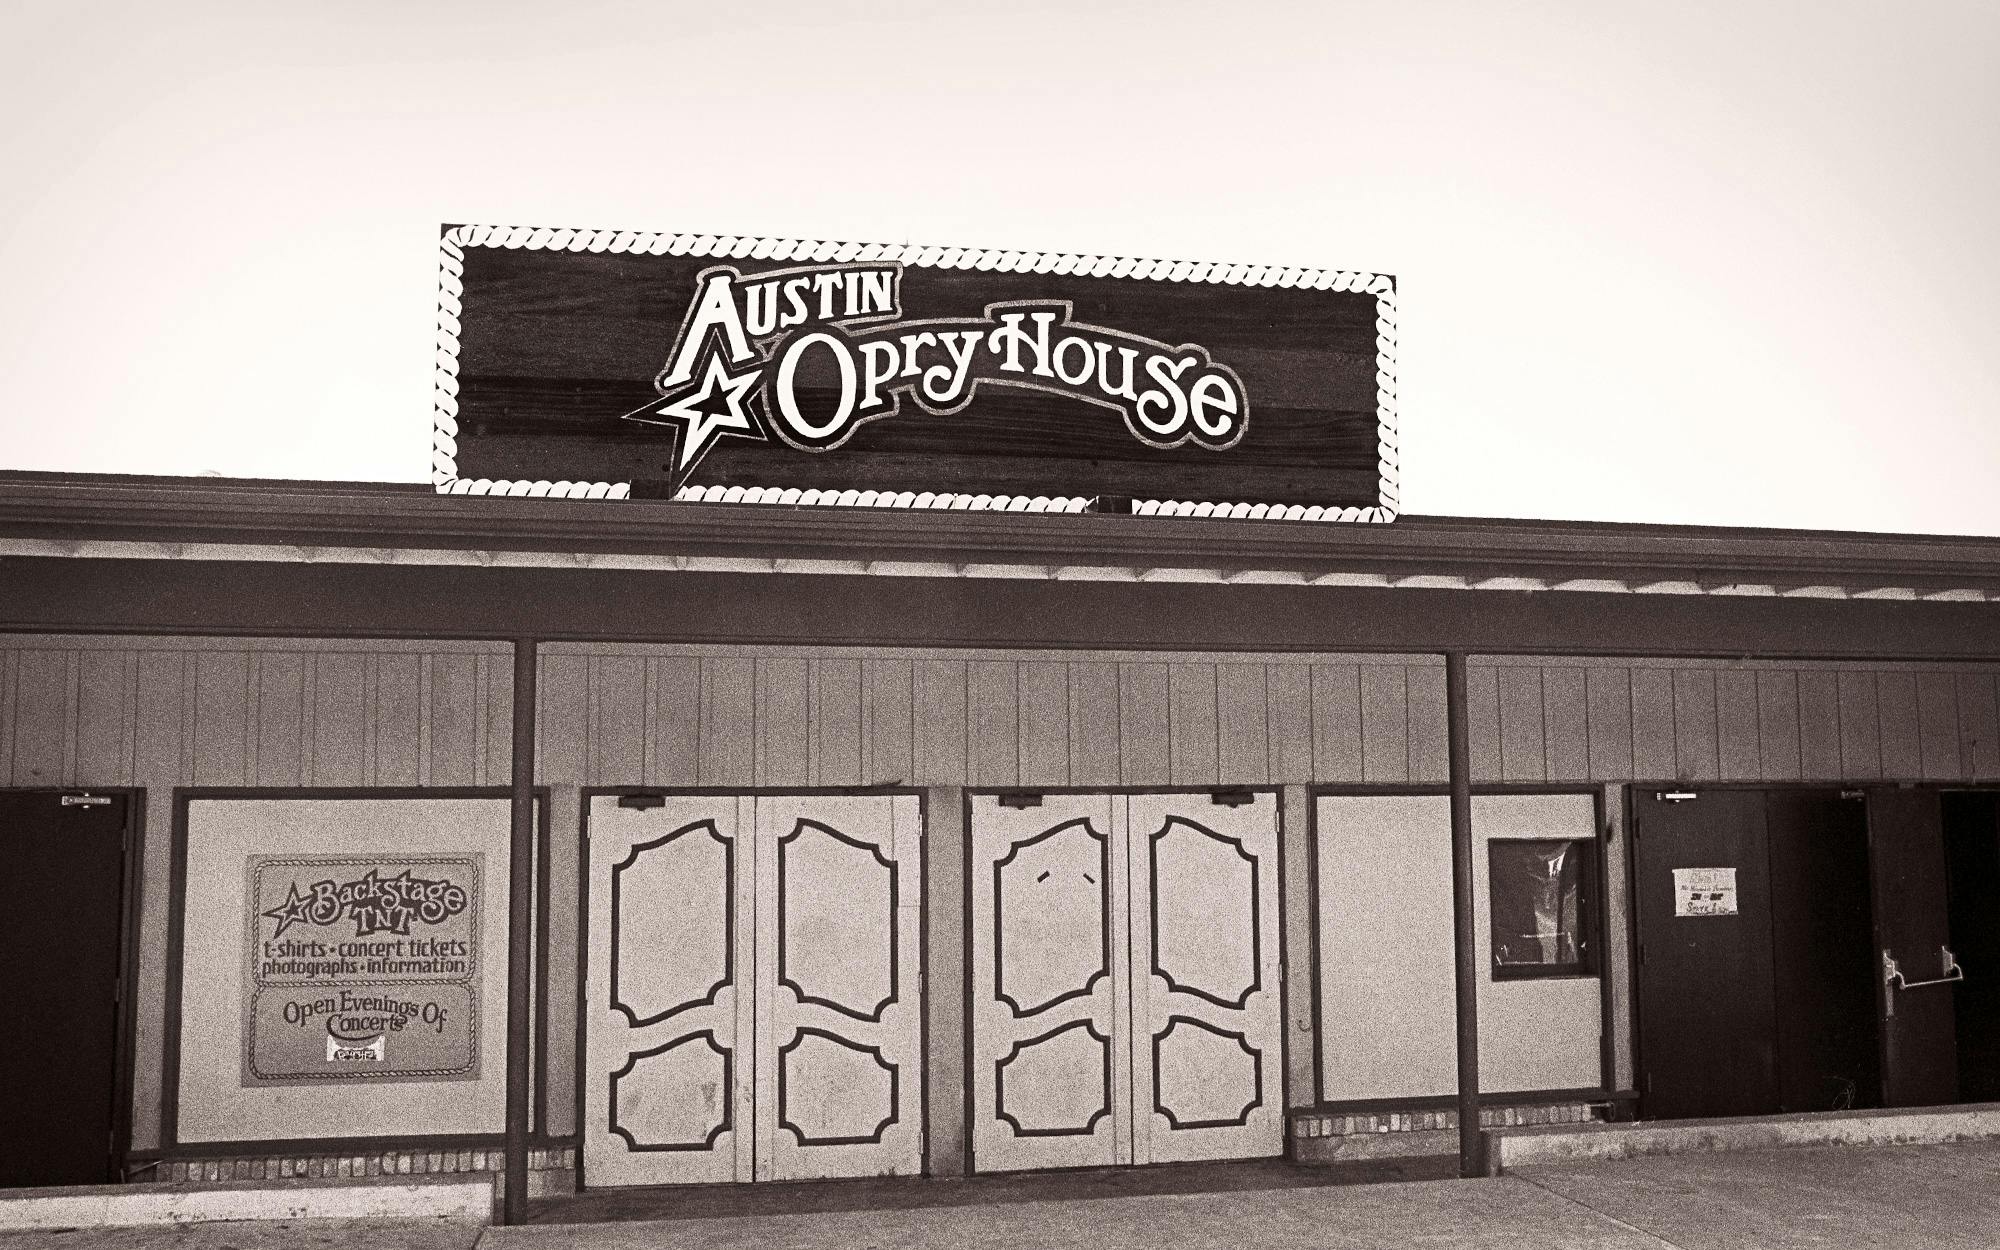 Austin Opry House’s exterior